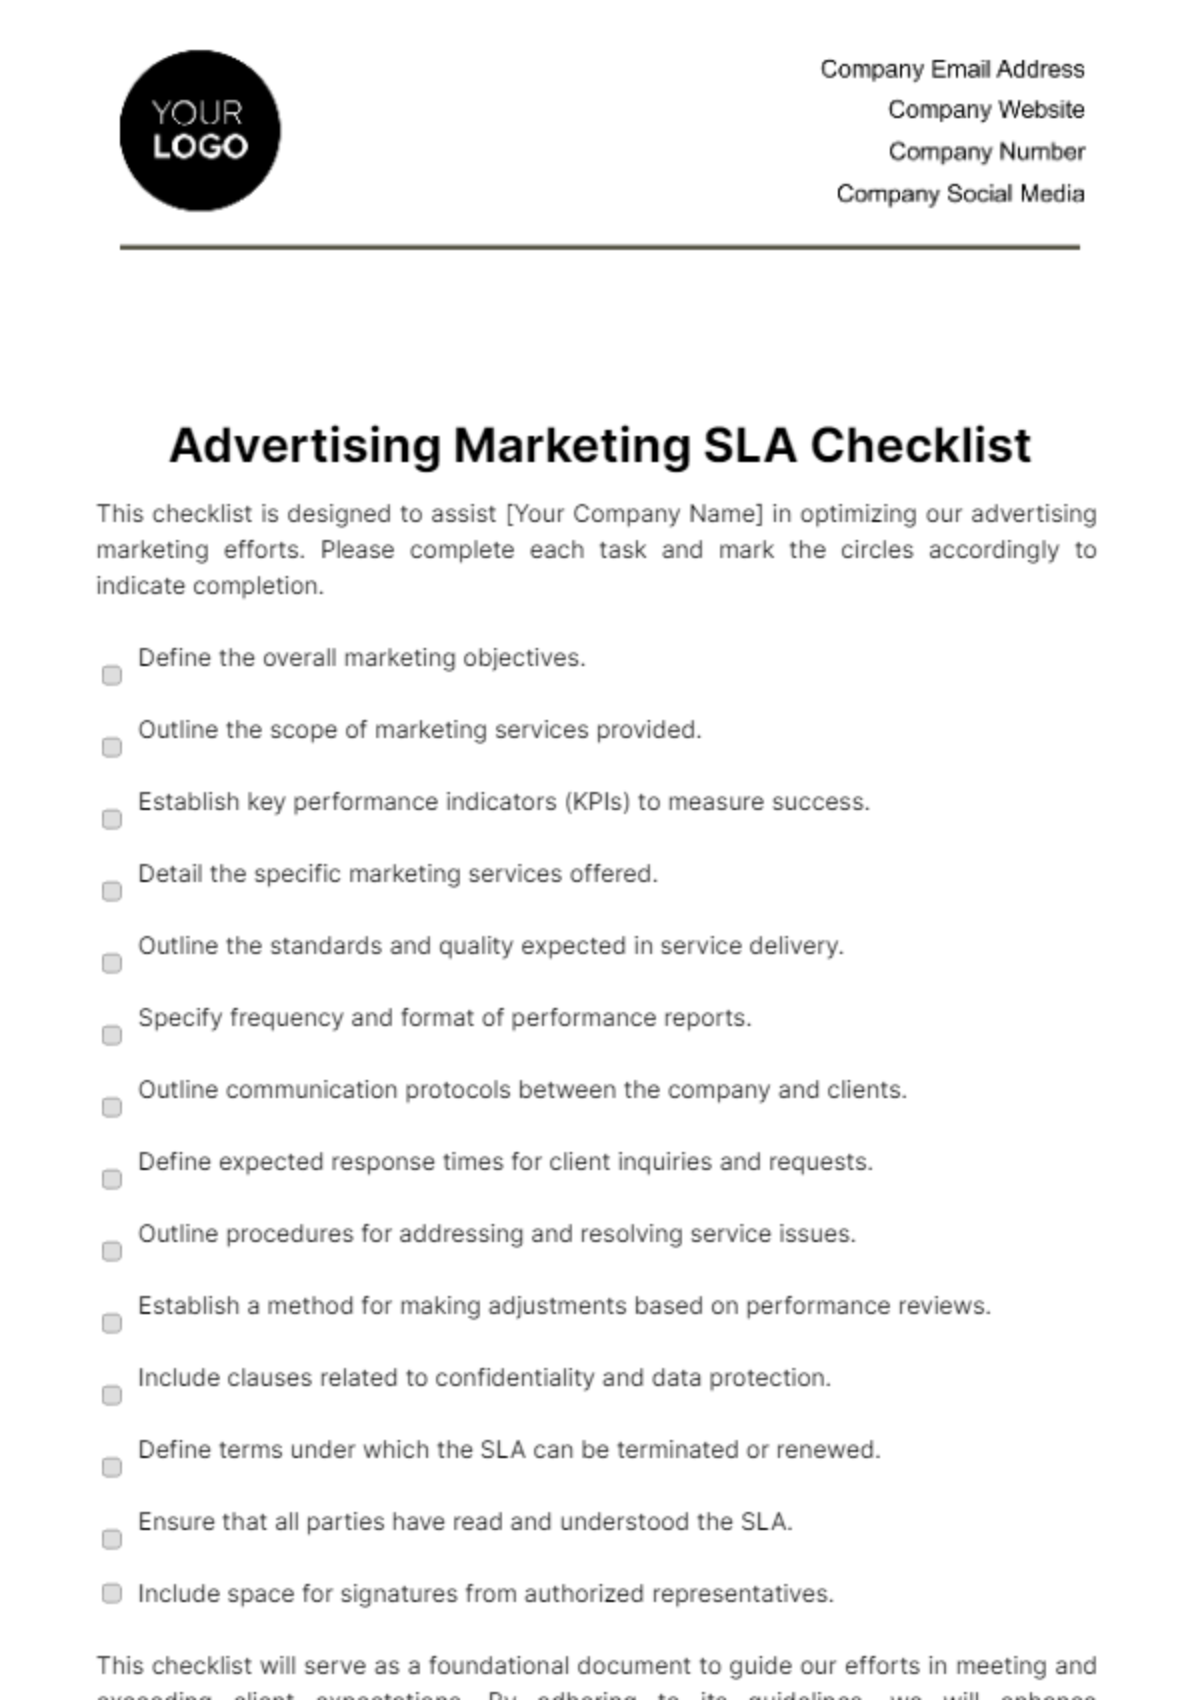 Free Advertising Marketing SLA Checklist Template